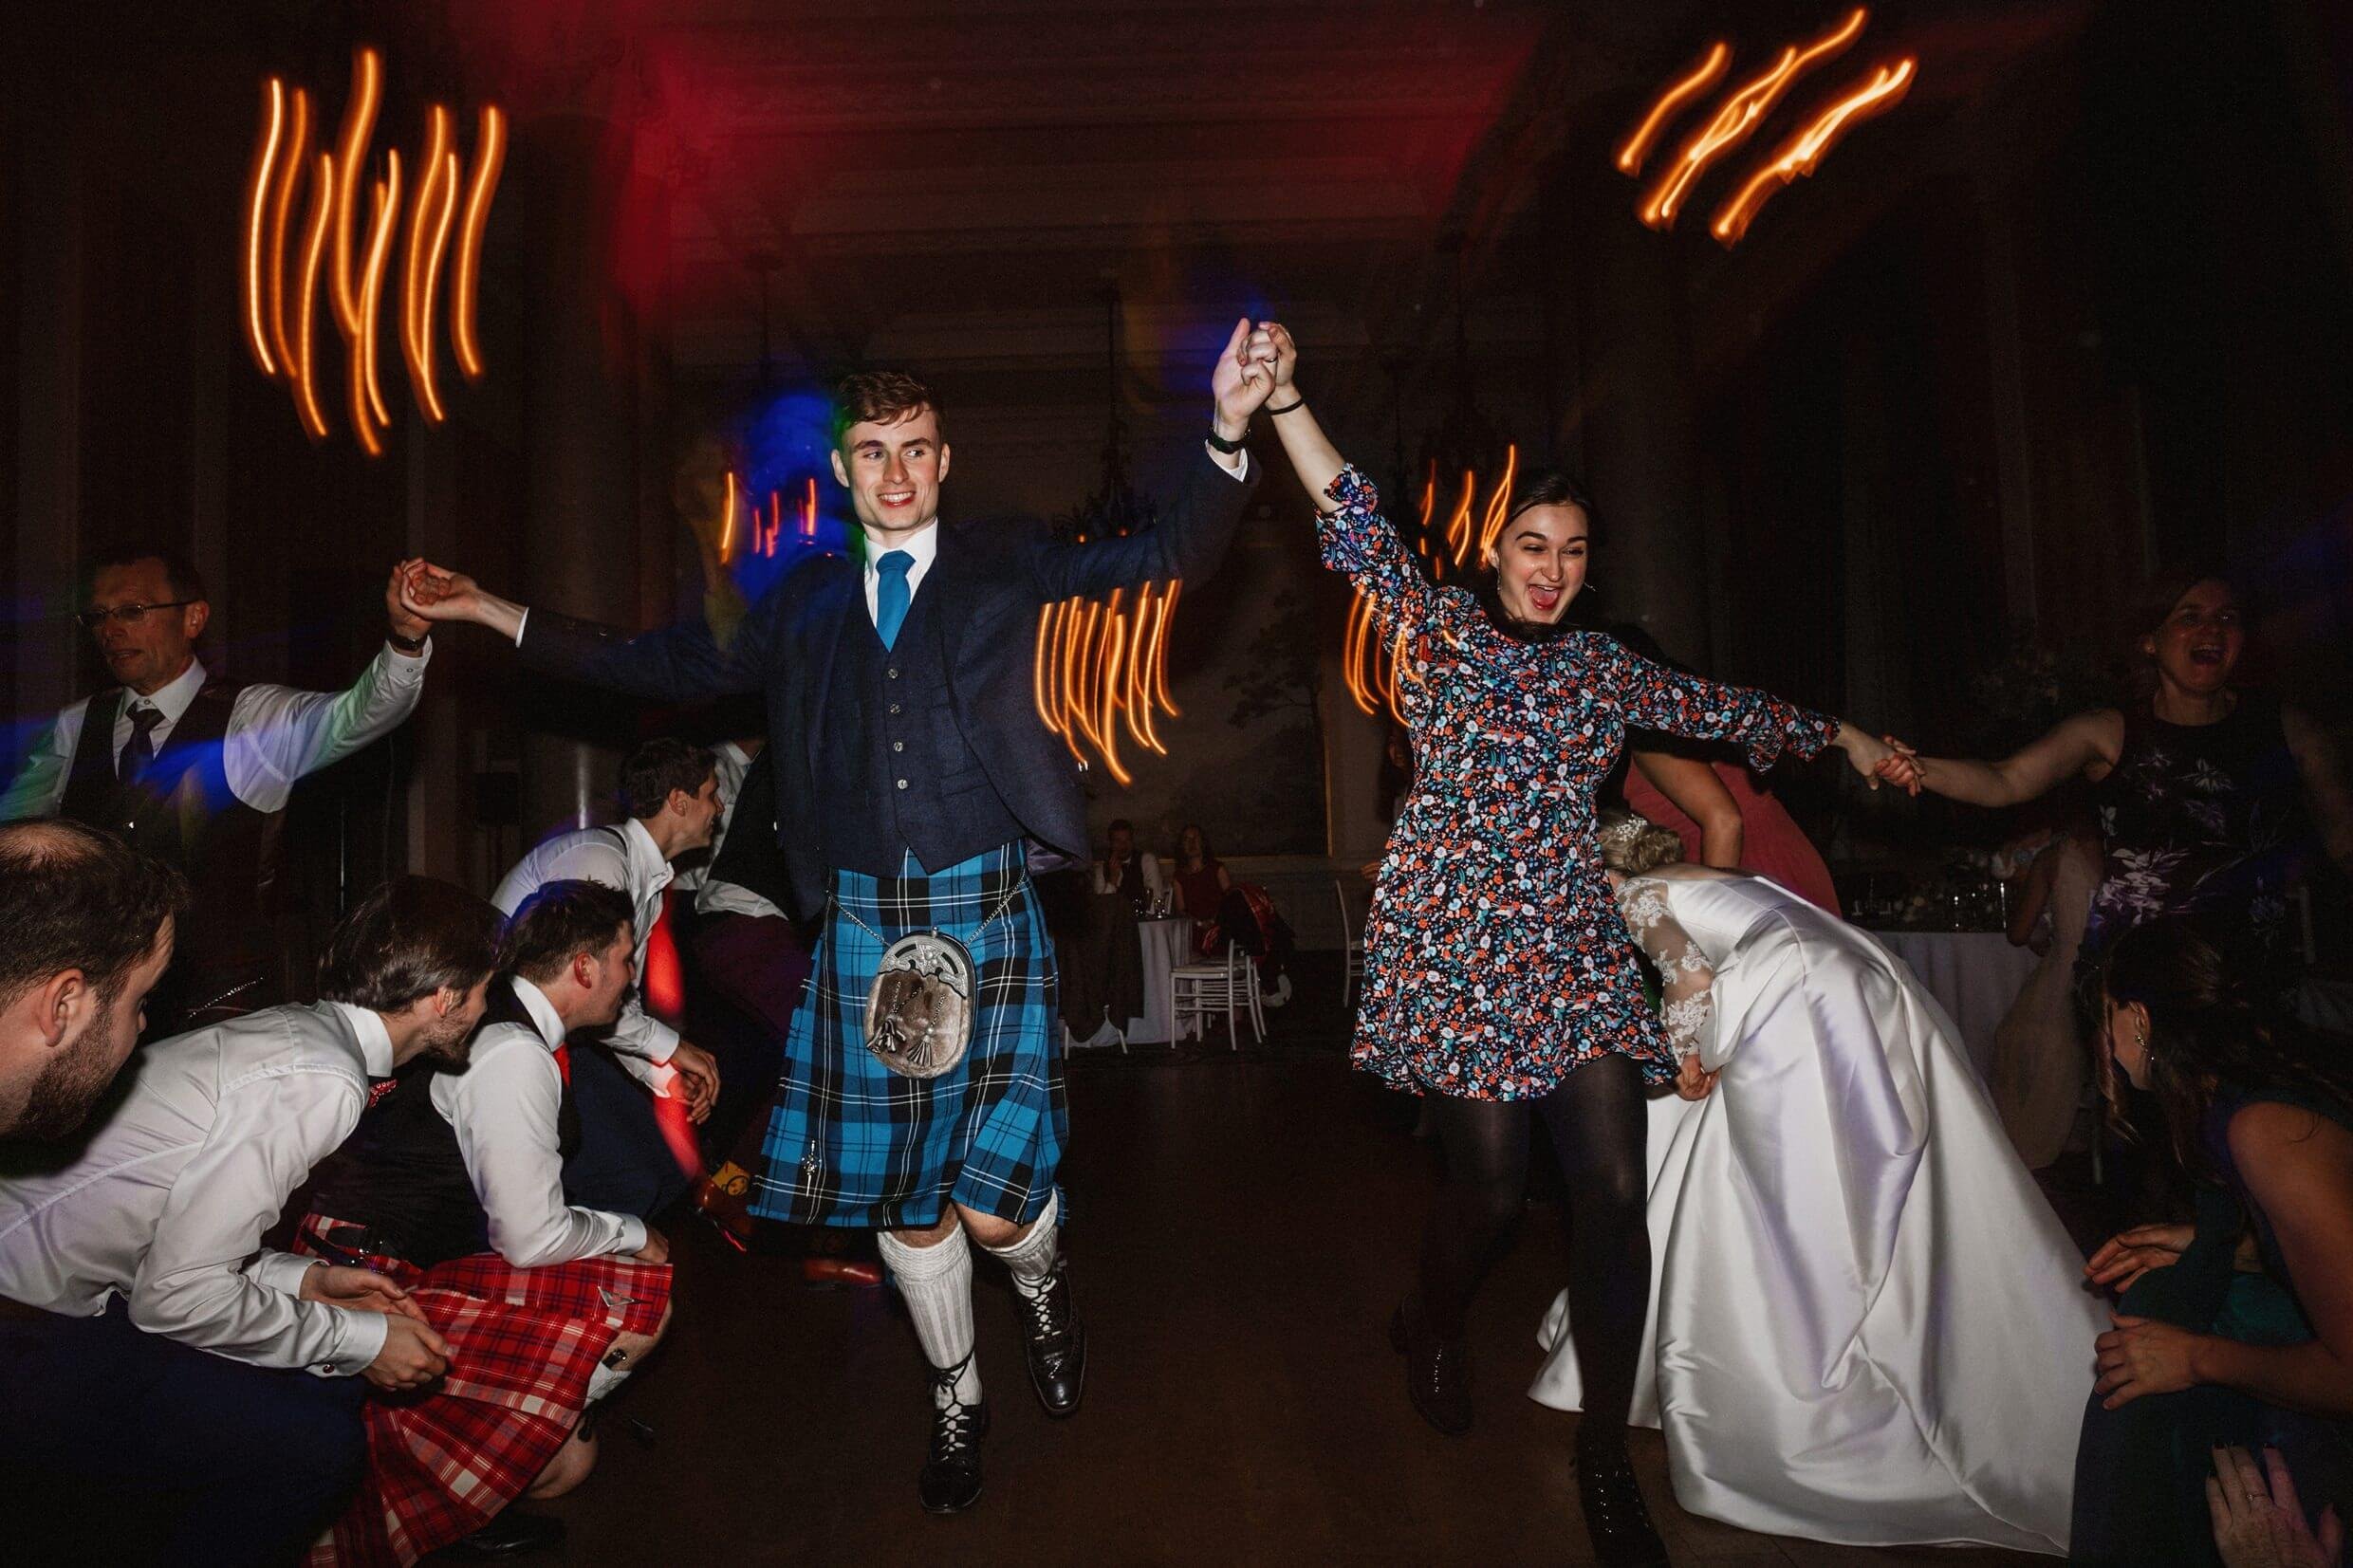 the wedding party ceilidh dancing at the balmoral hotel edinburgh wedding venue in scotland